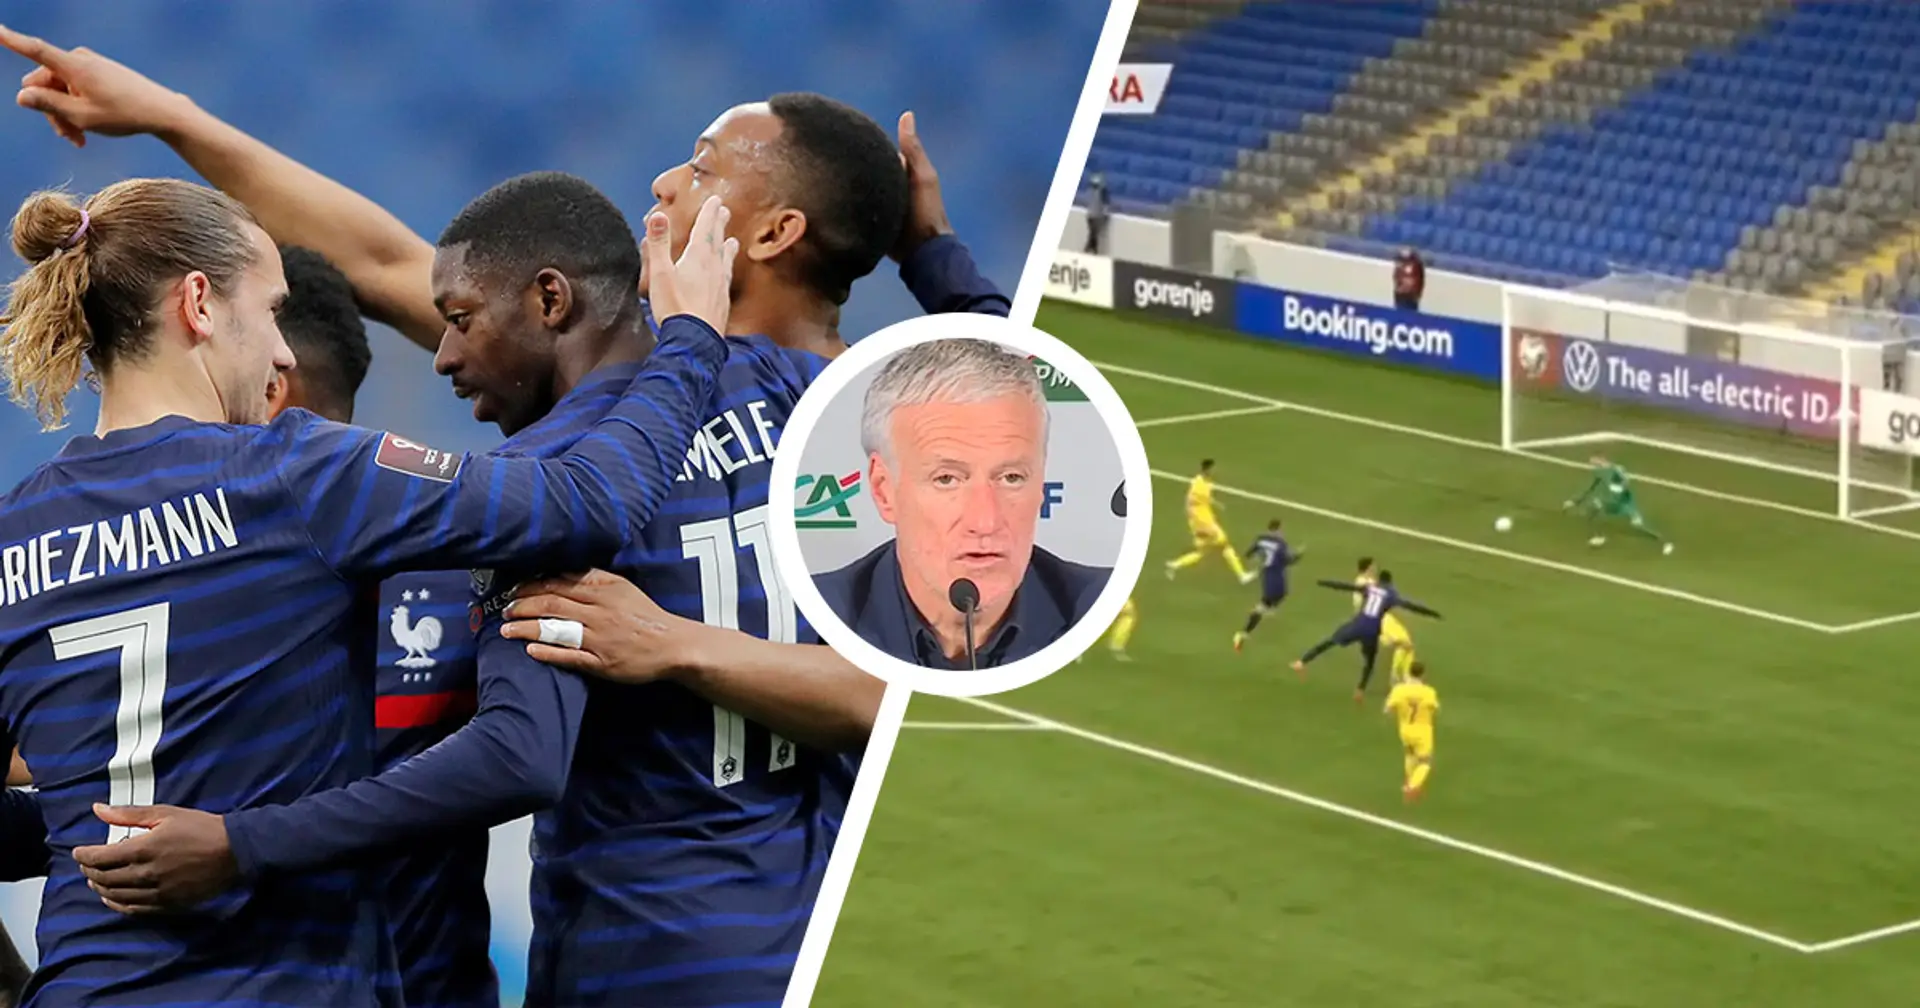 'Dembélé confirma que va por el buen camino': el seleccionador de Francia, Deschamps, elogia a Ous tras su actuación ante Kazajistán